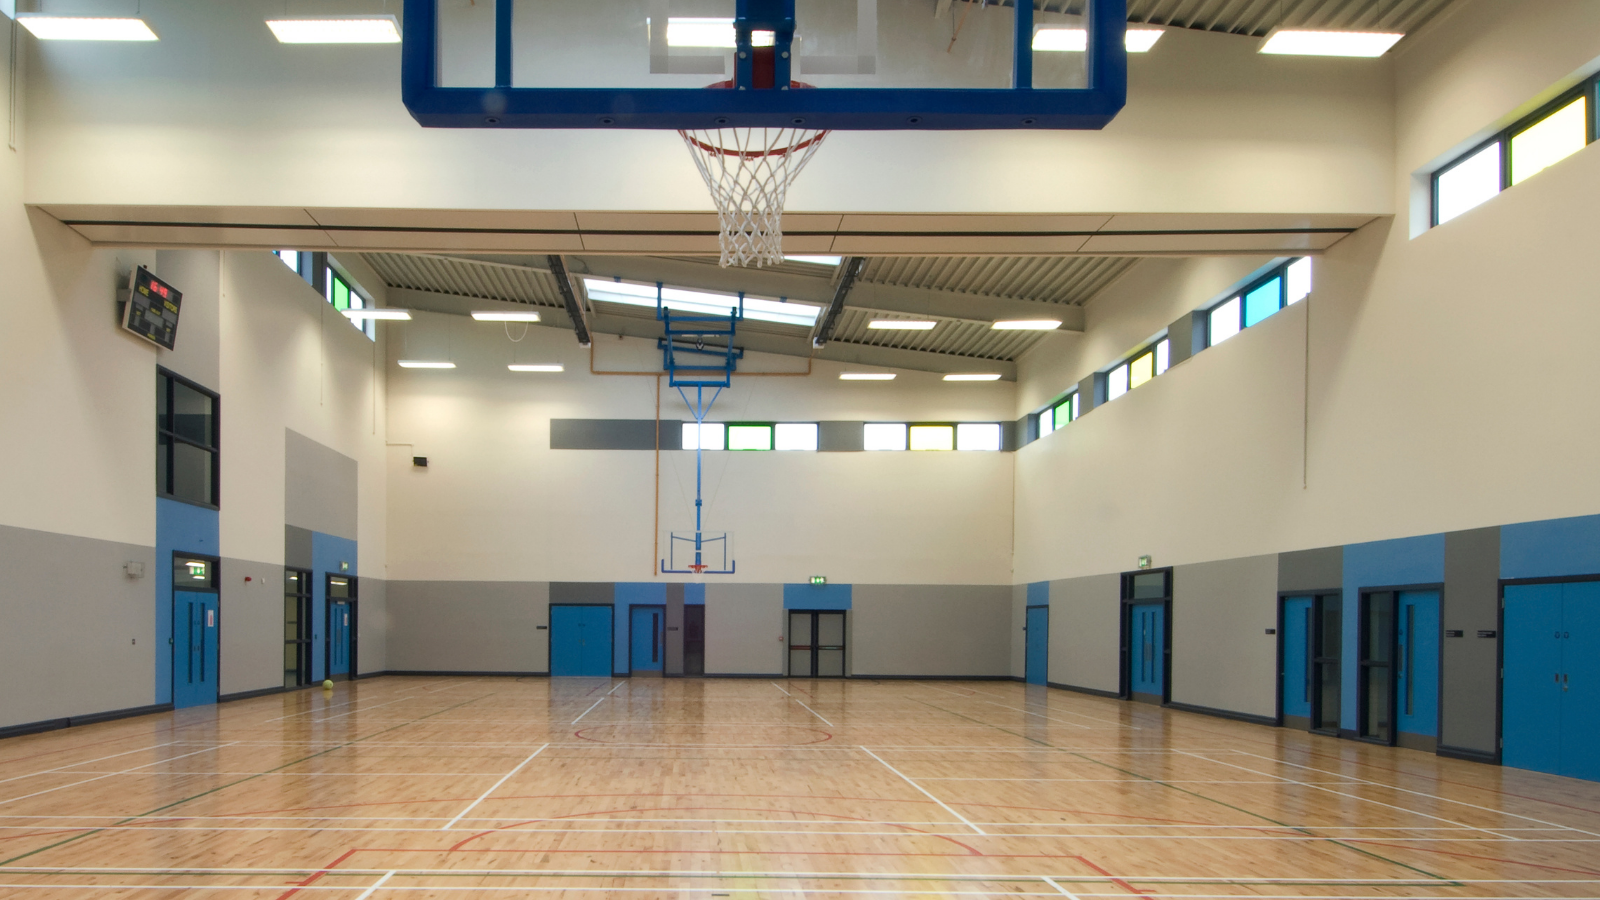 Lack of facilities failing community sports groups